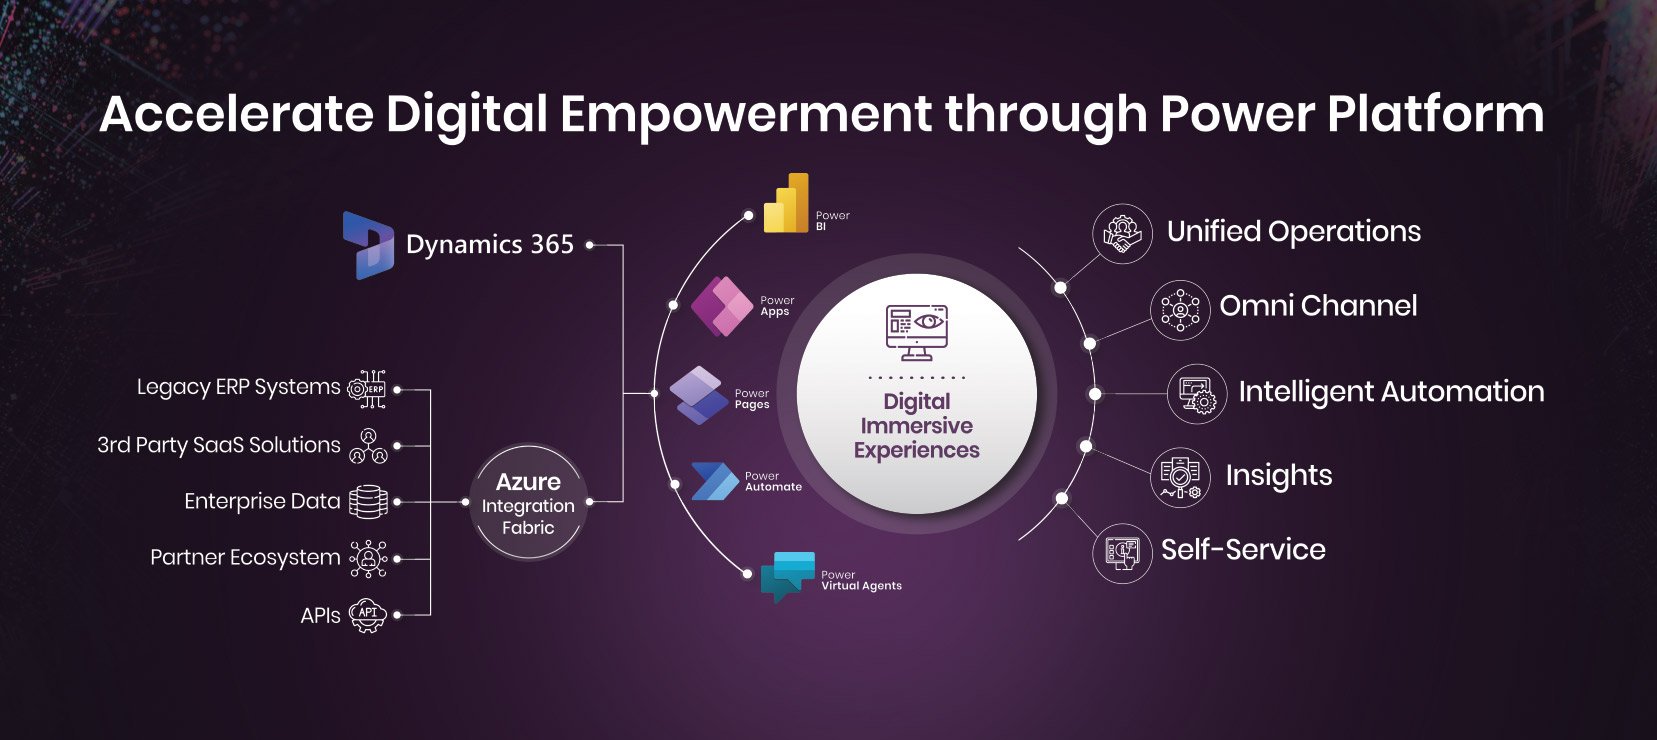 Accelerate Digital Empowerment through Power Platform